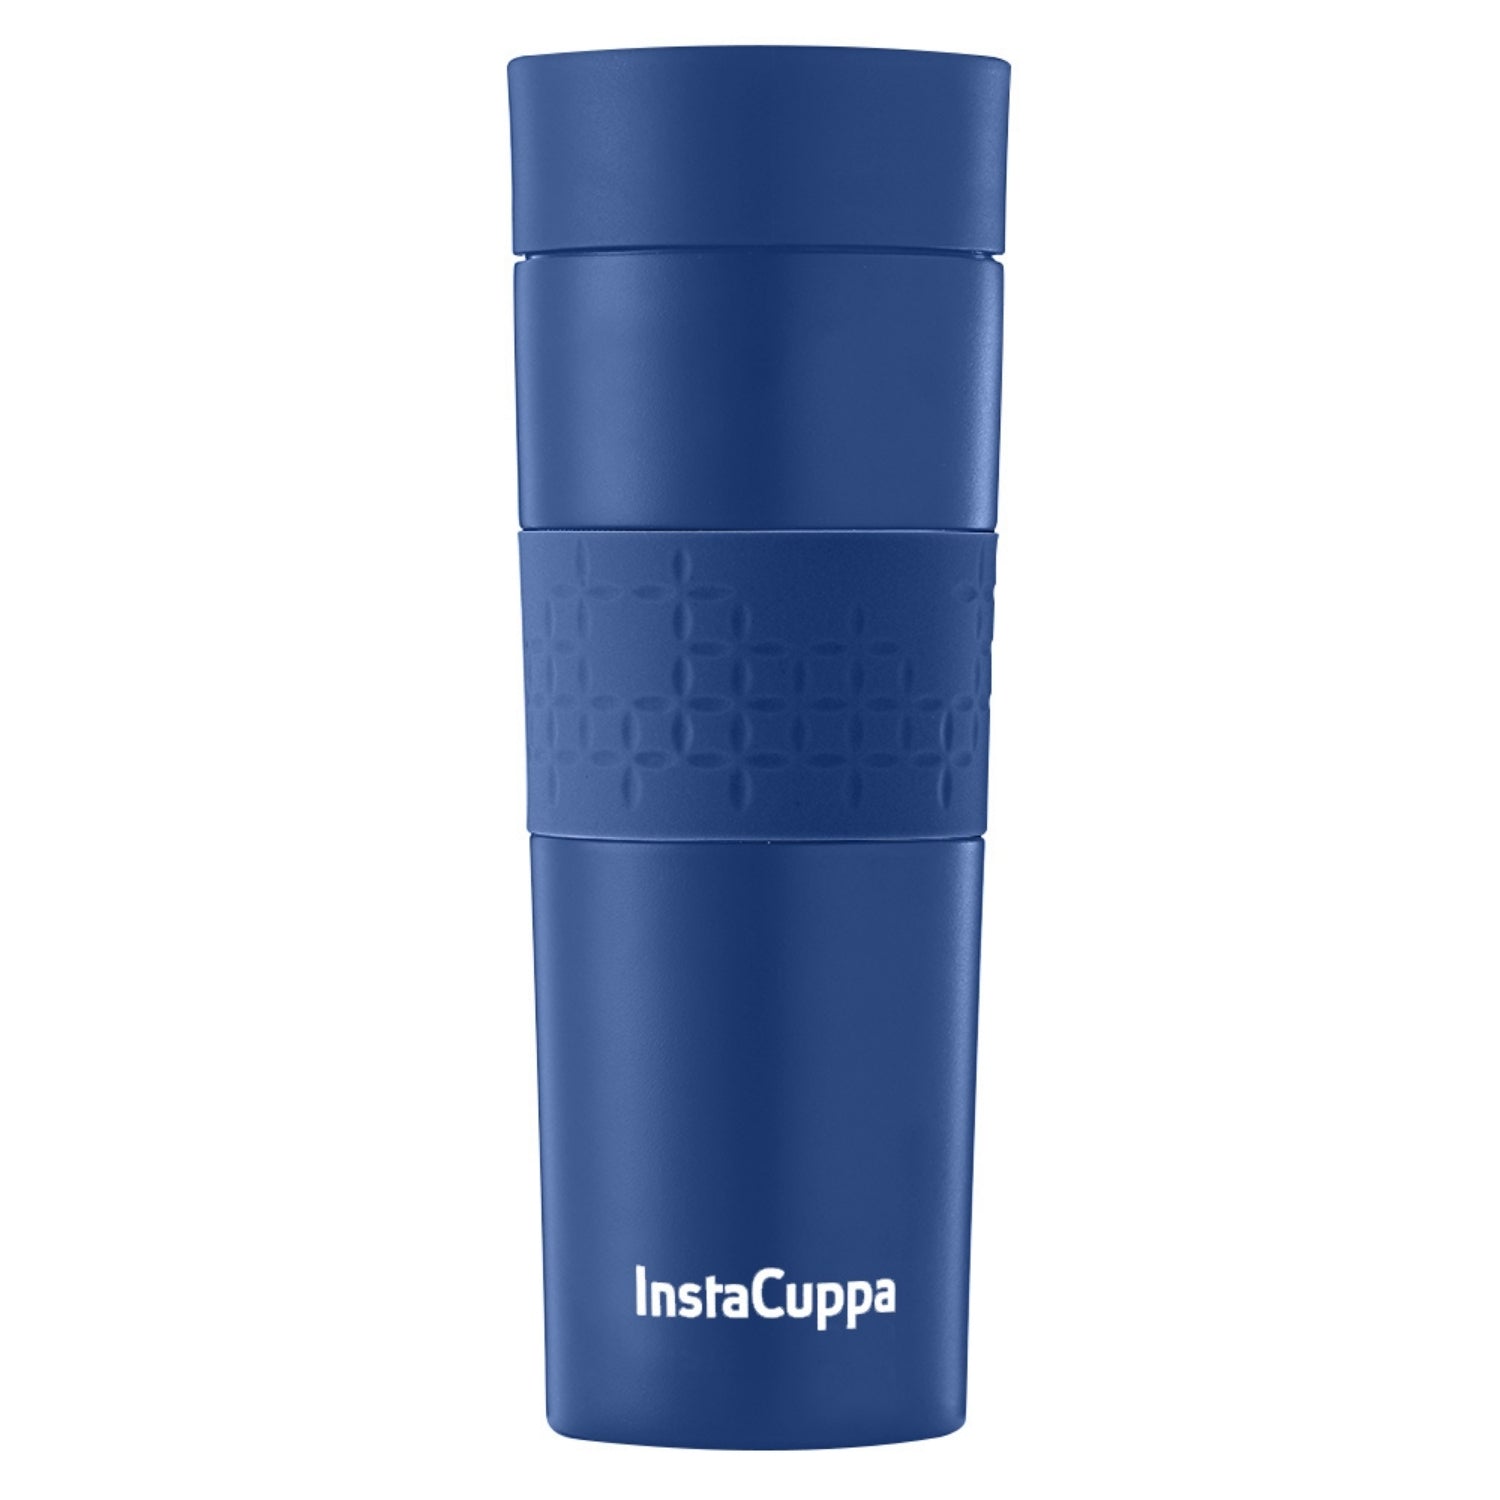 Premia: Glass mug with Silicon grip & Flip Top lid